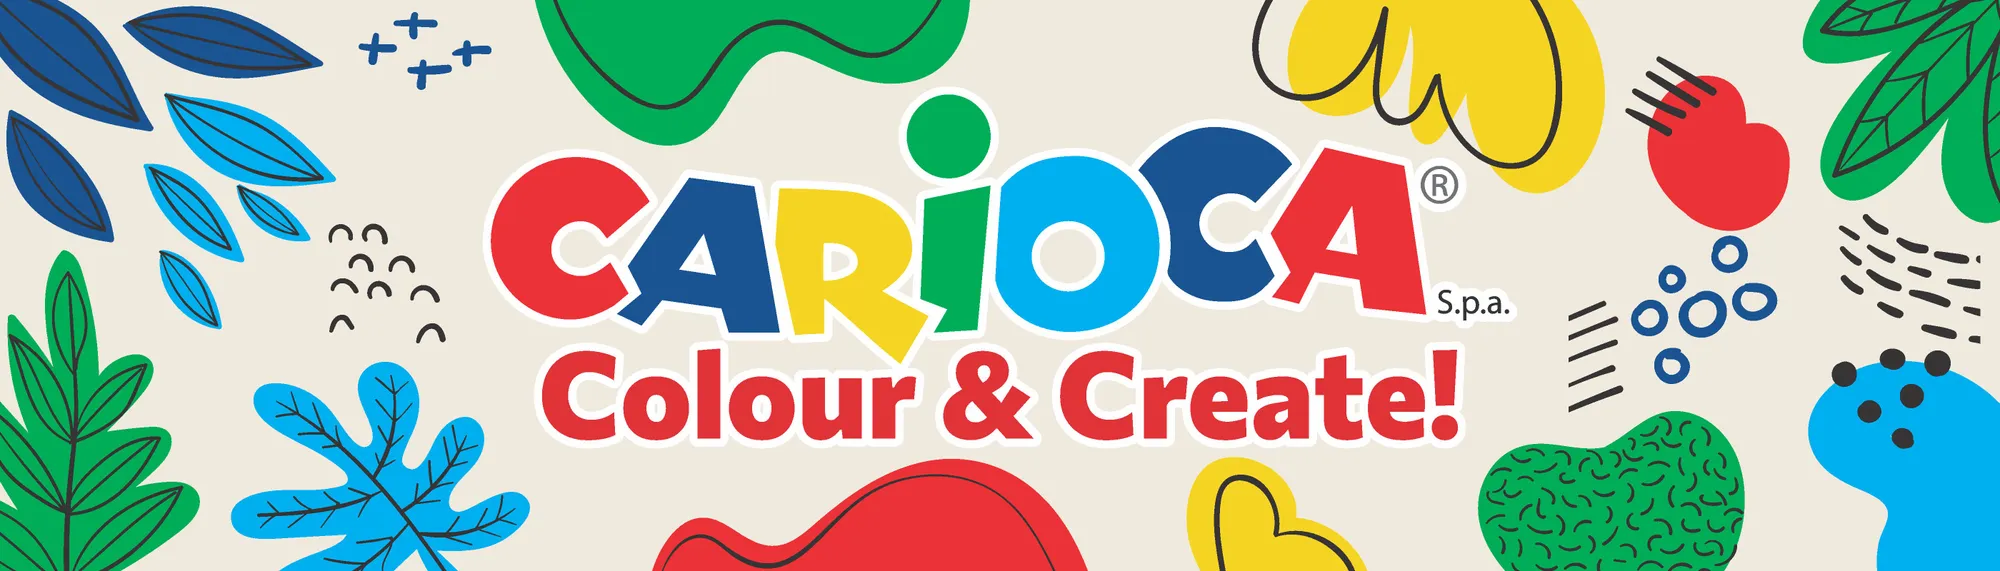 Carioca Colour & Create Competition | Waltons